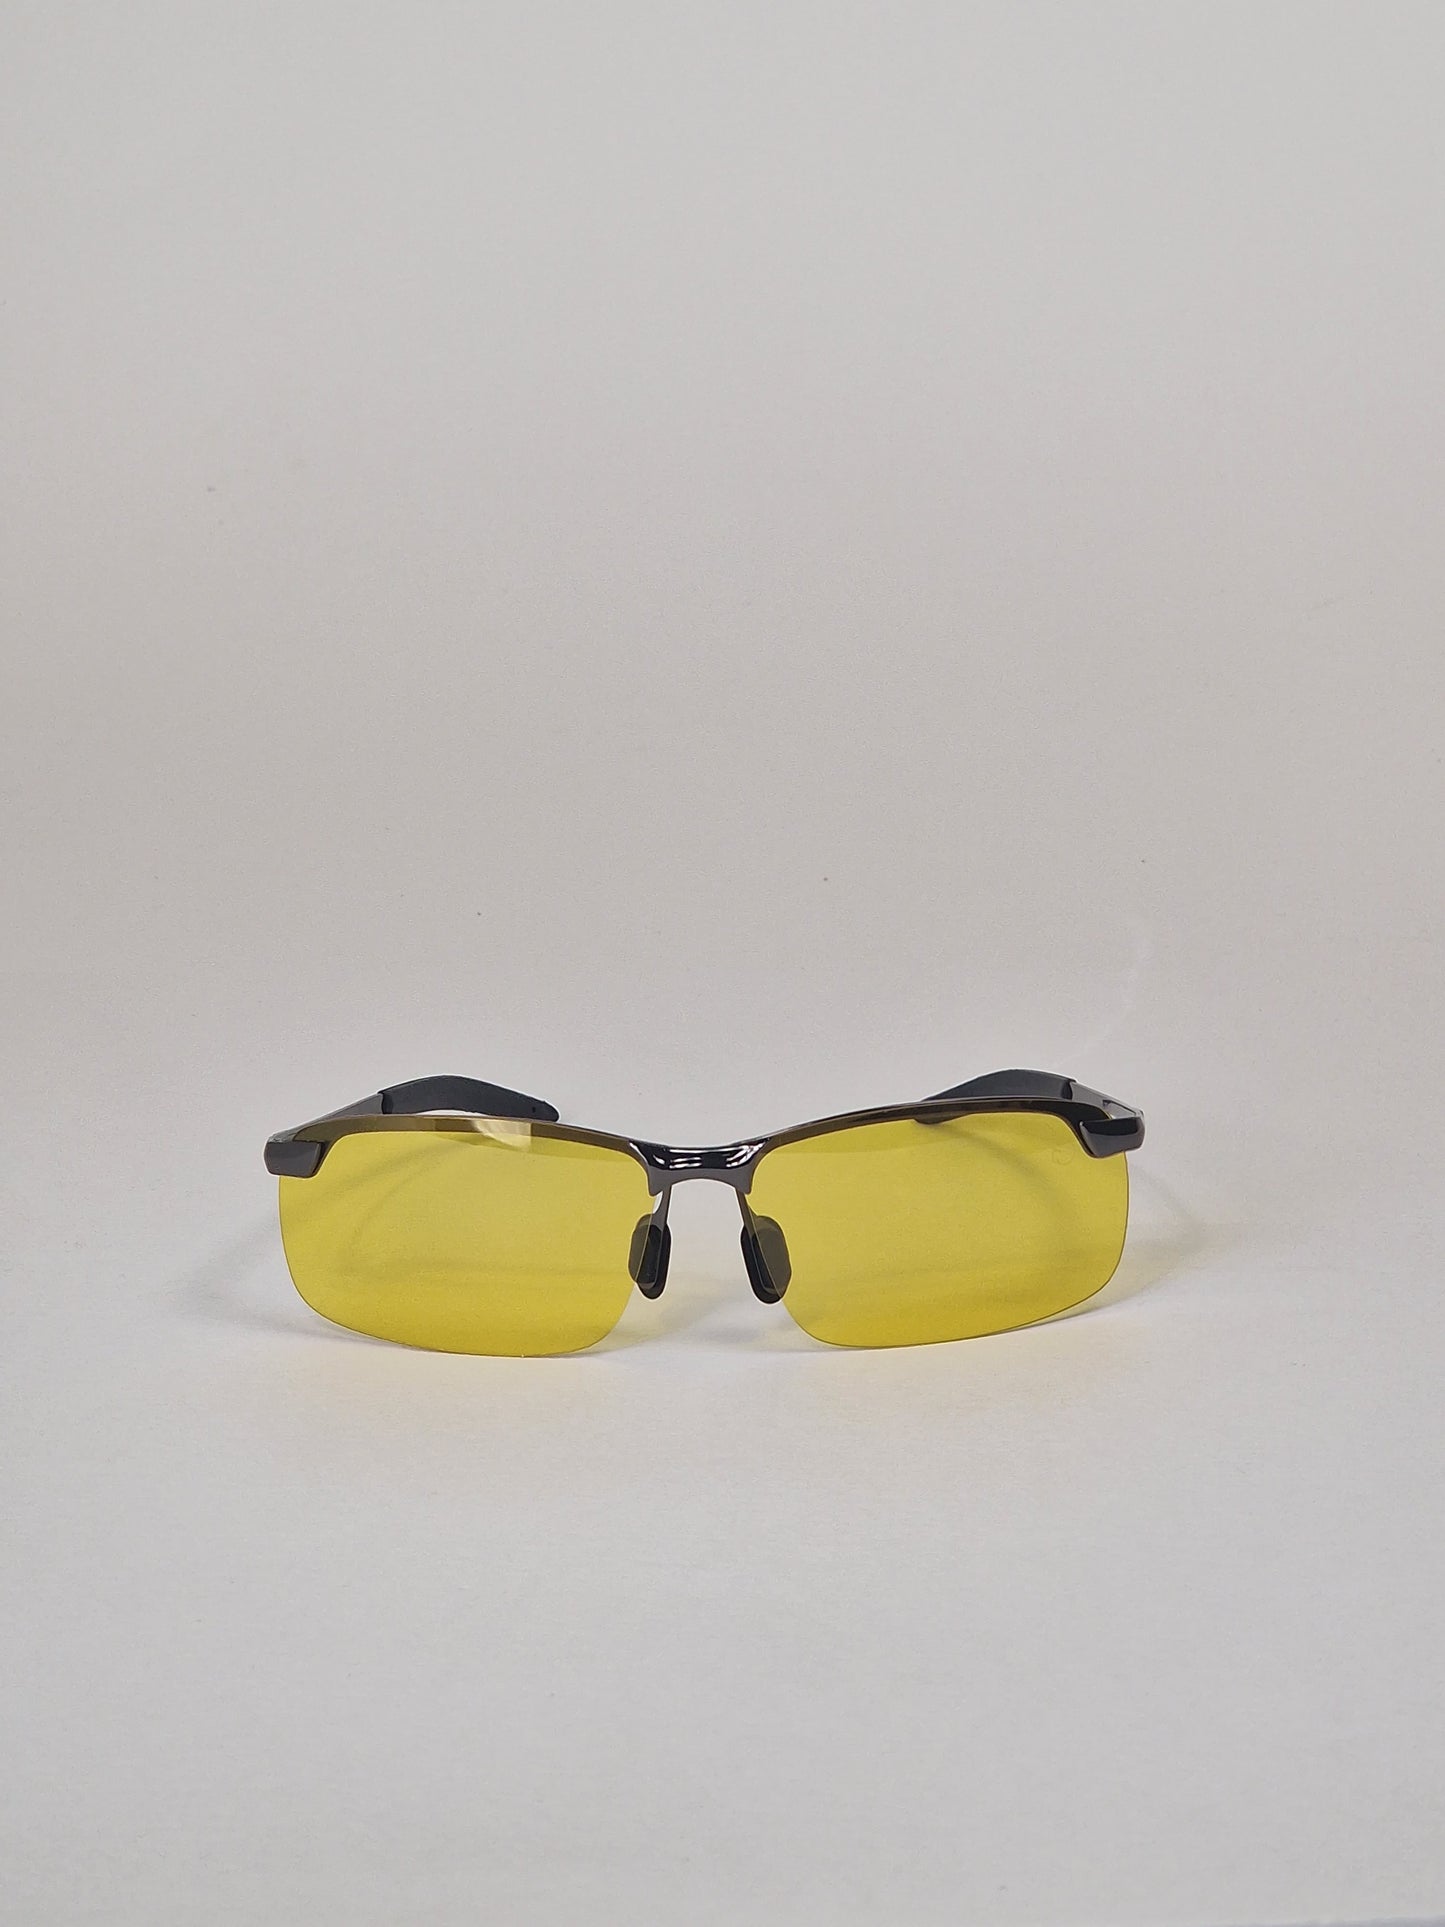 Sunglasses, model 22 - Yellow tinted.